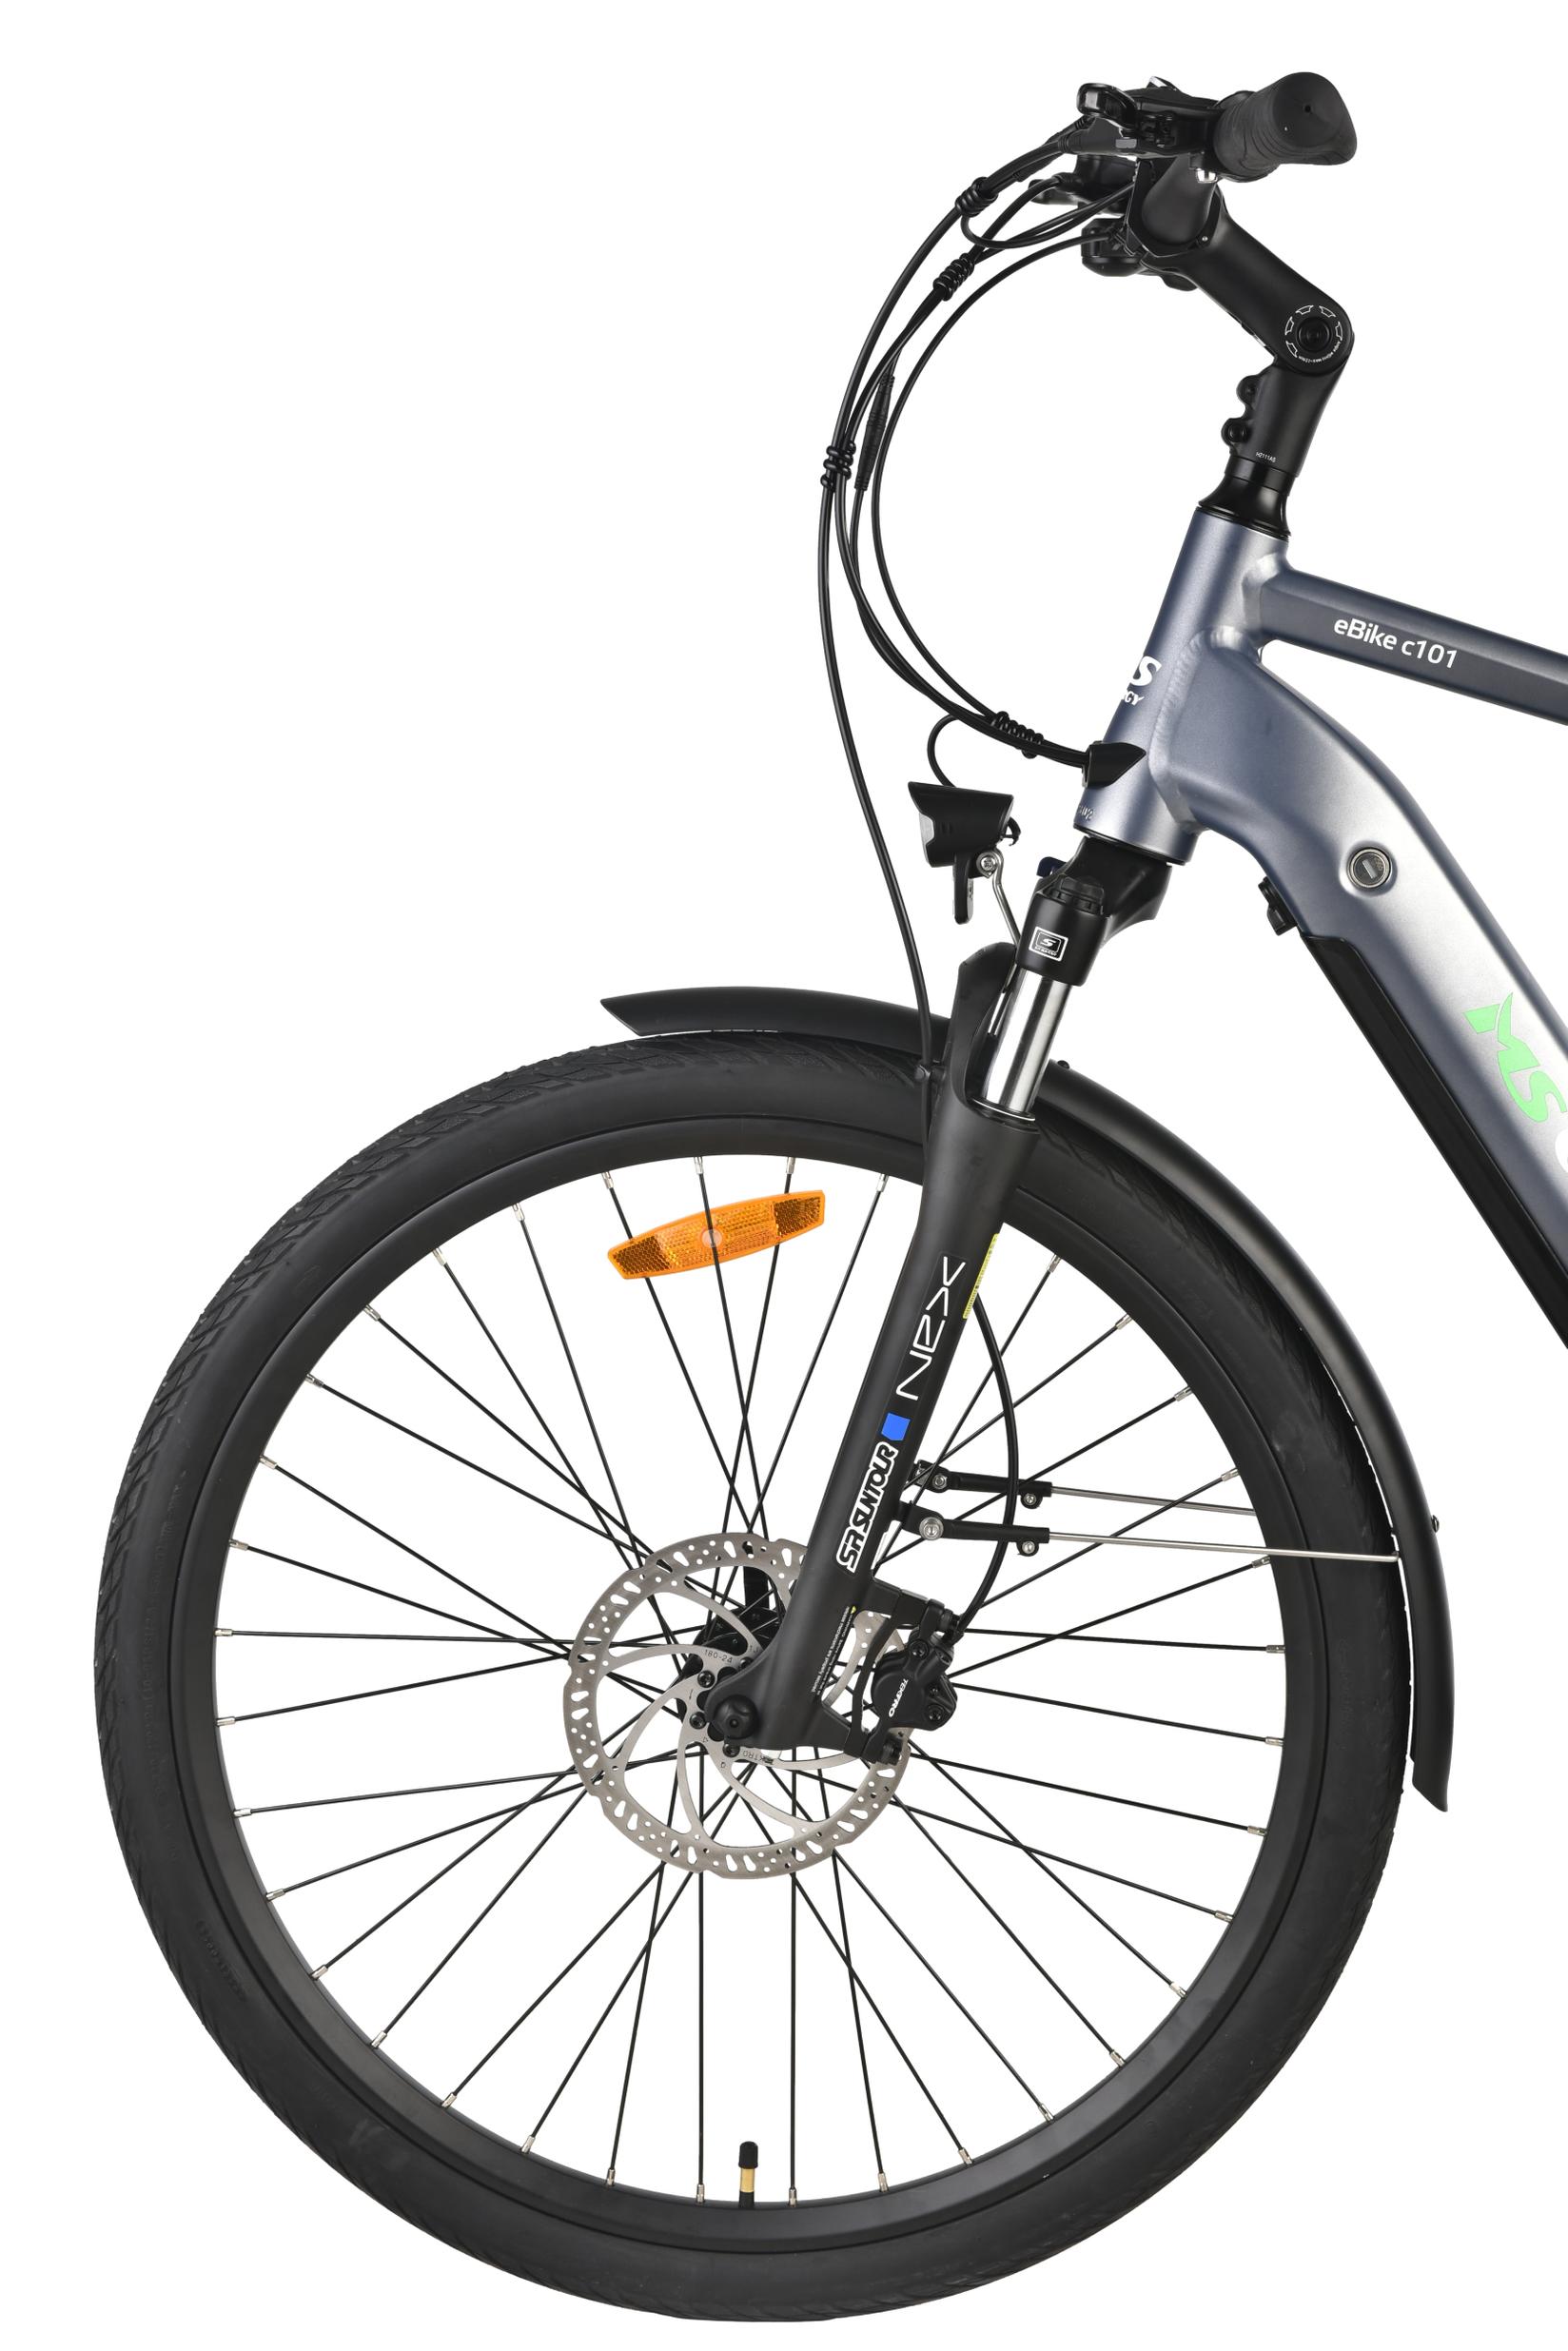 Selected image for MS ENERGY Električni bicikl eBike c101 antracit